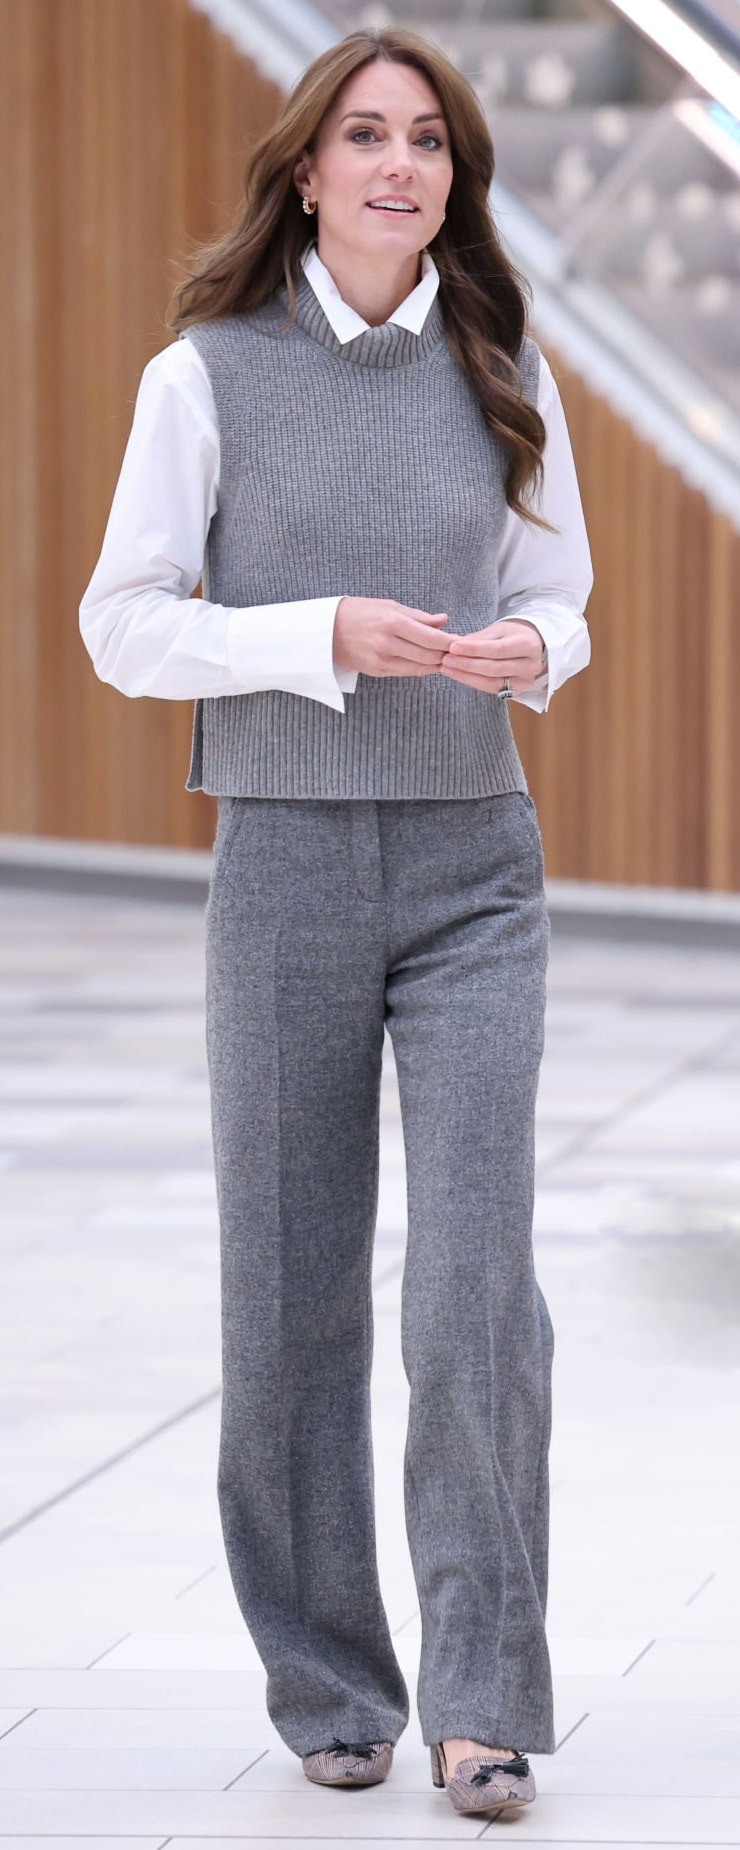 Sezane Martin Wool Trousers in Mottled Grey as seen on Kate Middleton, Princess of Wales.